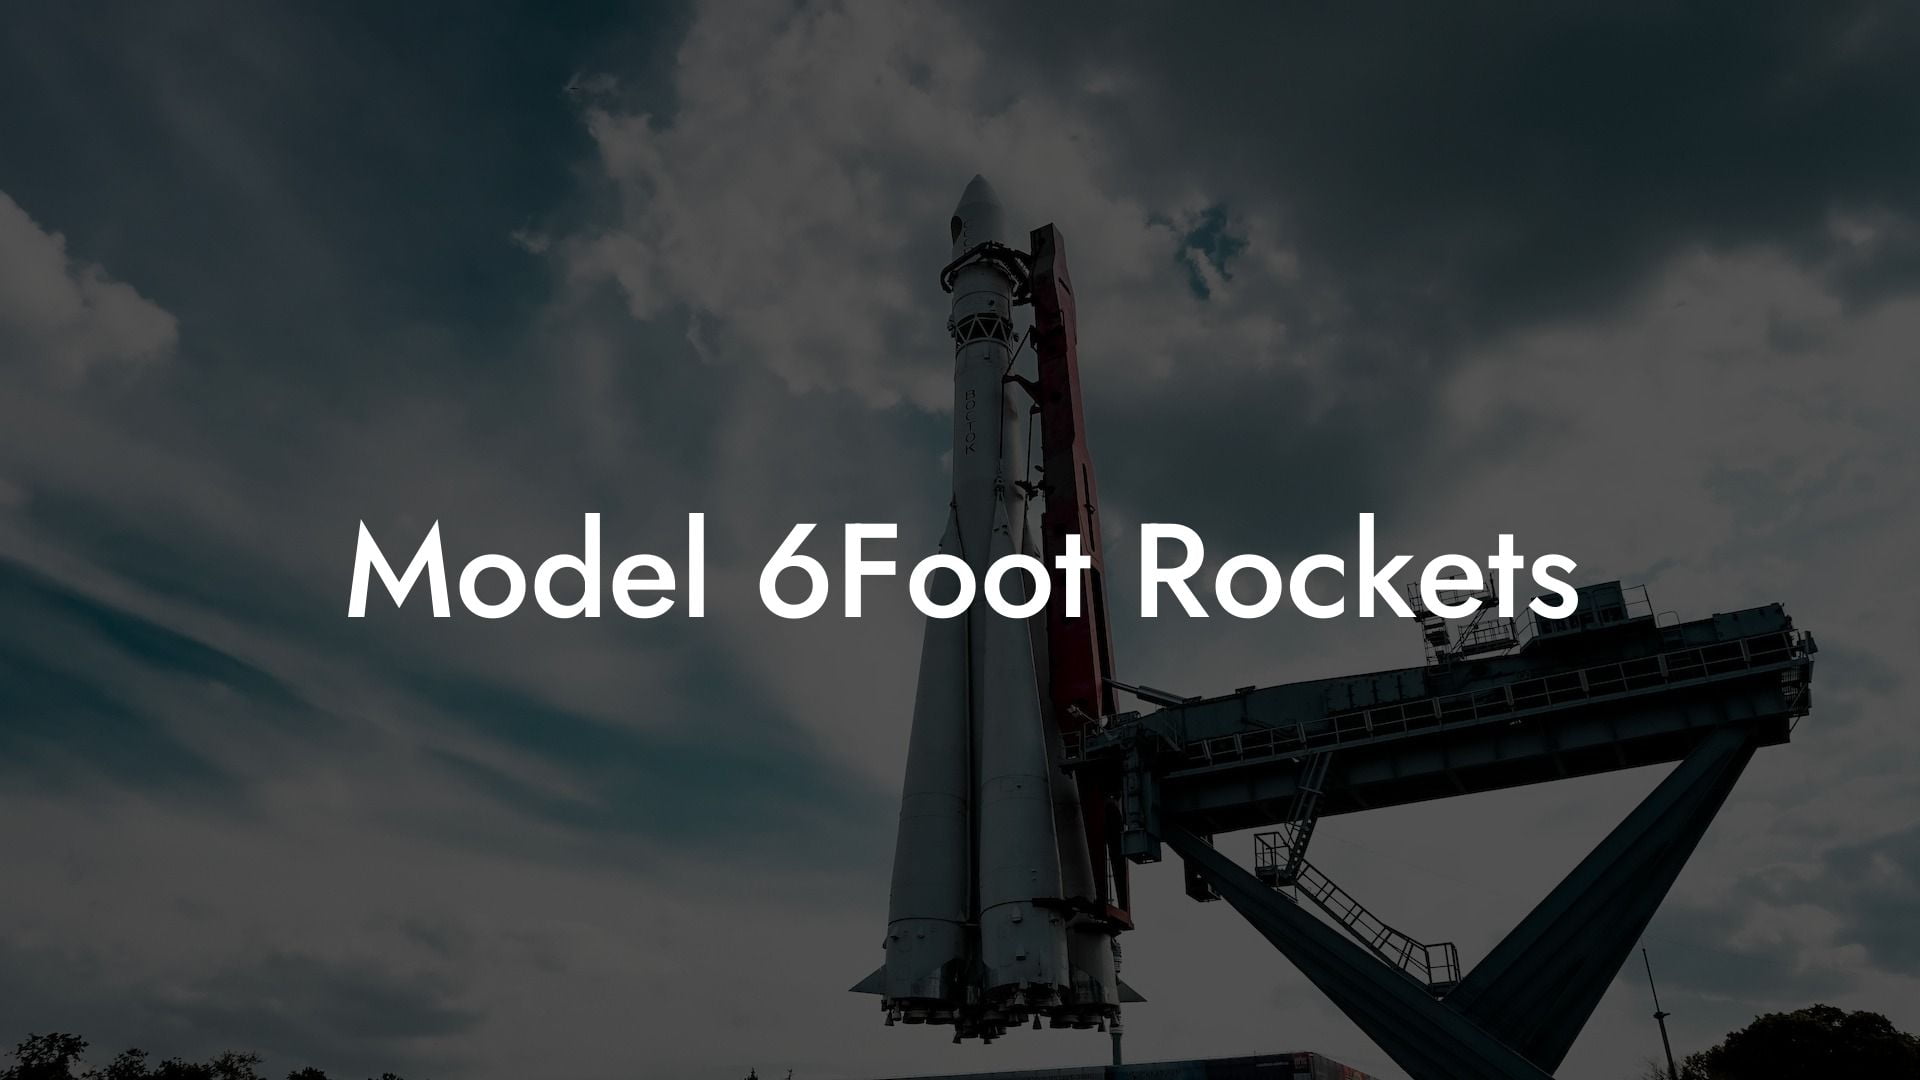 Model 6Foot Rockets